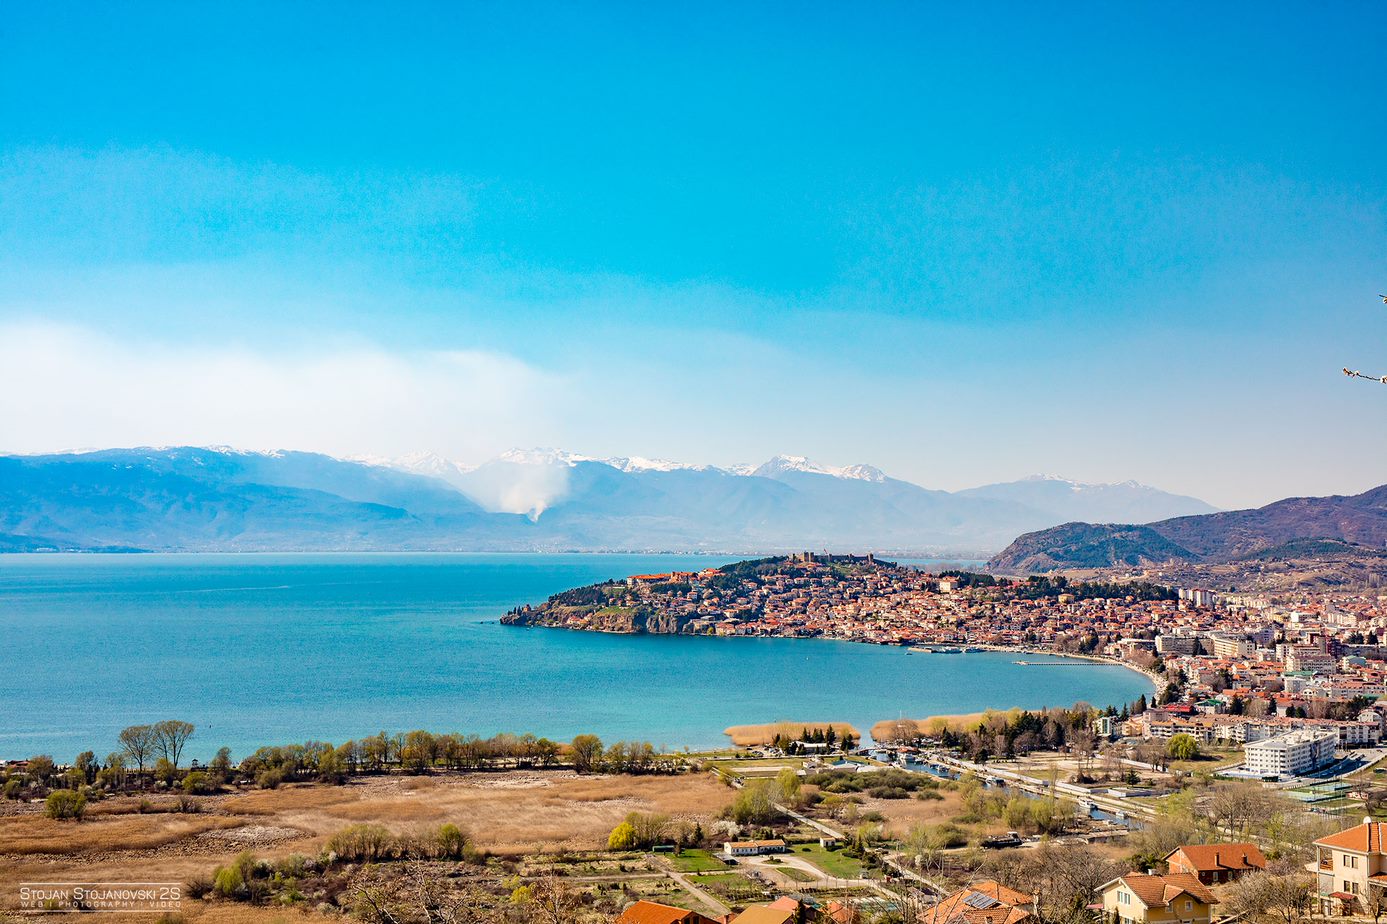 Lake Ohrid Transboundary Management Plan presented at North Macedonia National Consultation Meeting